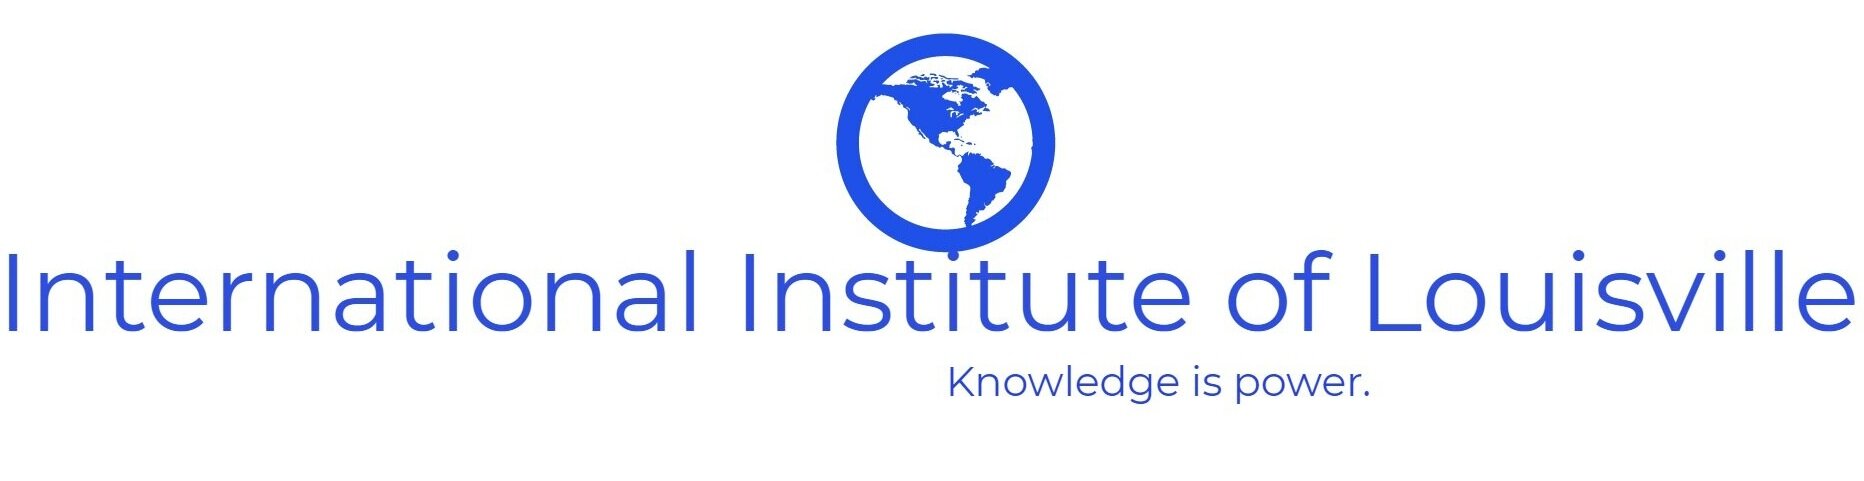 International Institute of Louisville